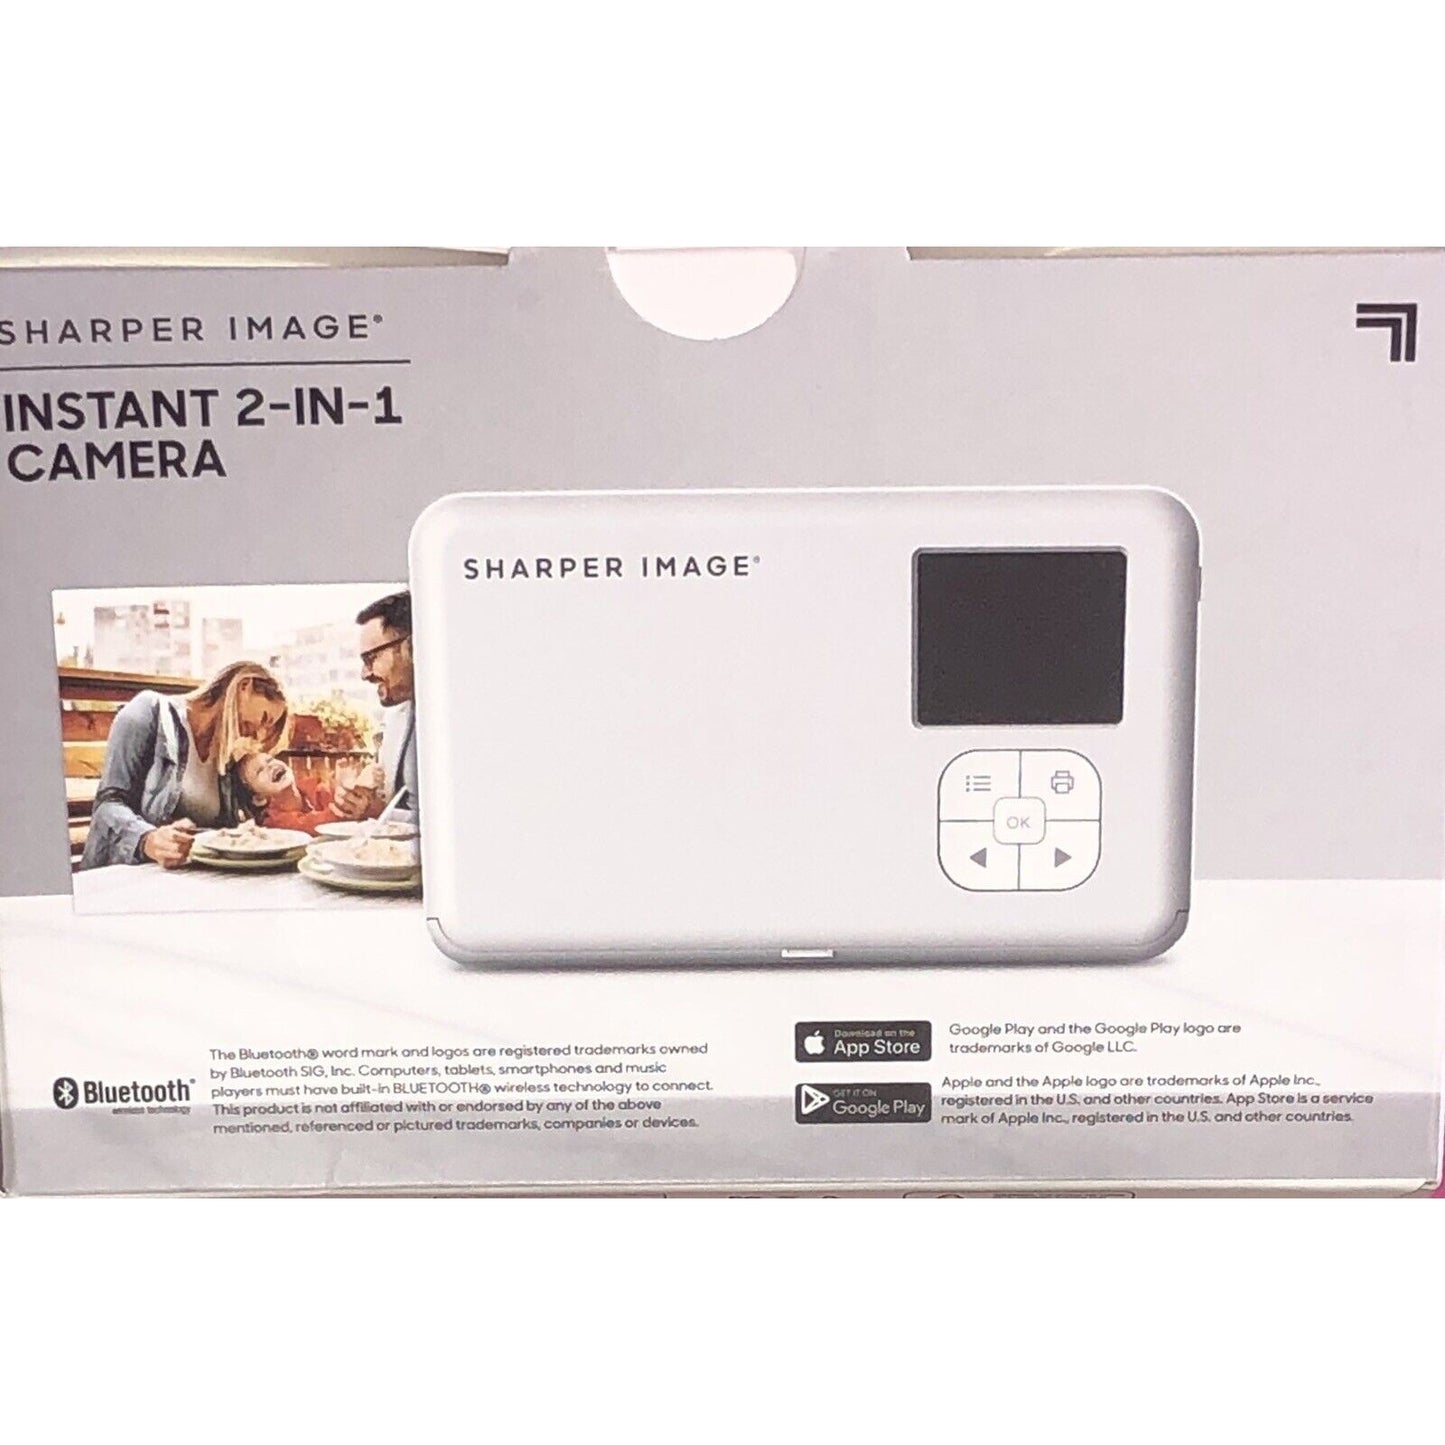 SHARPER IMAGE Instant Print Camera, 2.1" x 3.4" Print, 4Pass Tech, Pink - Variety Sales Etc.